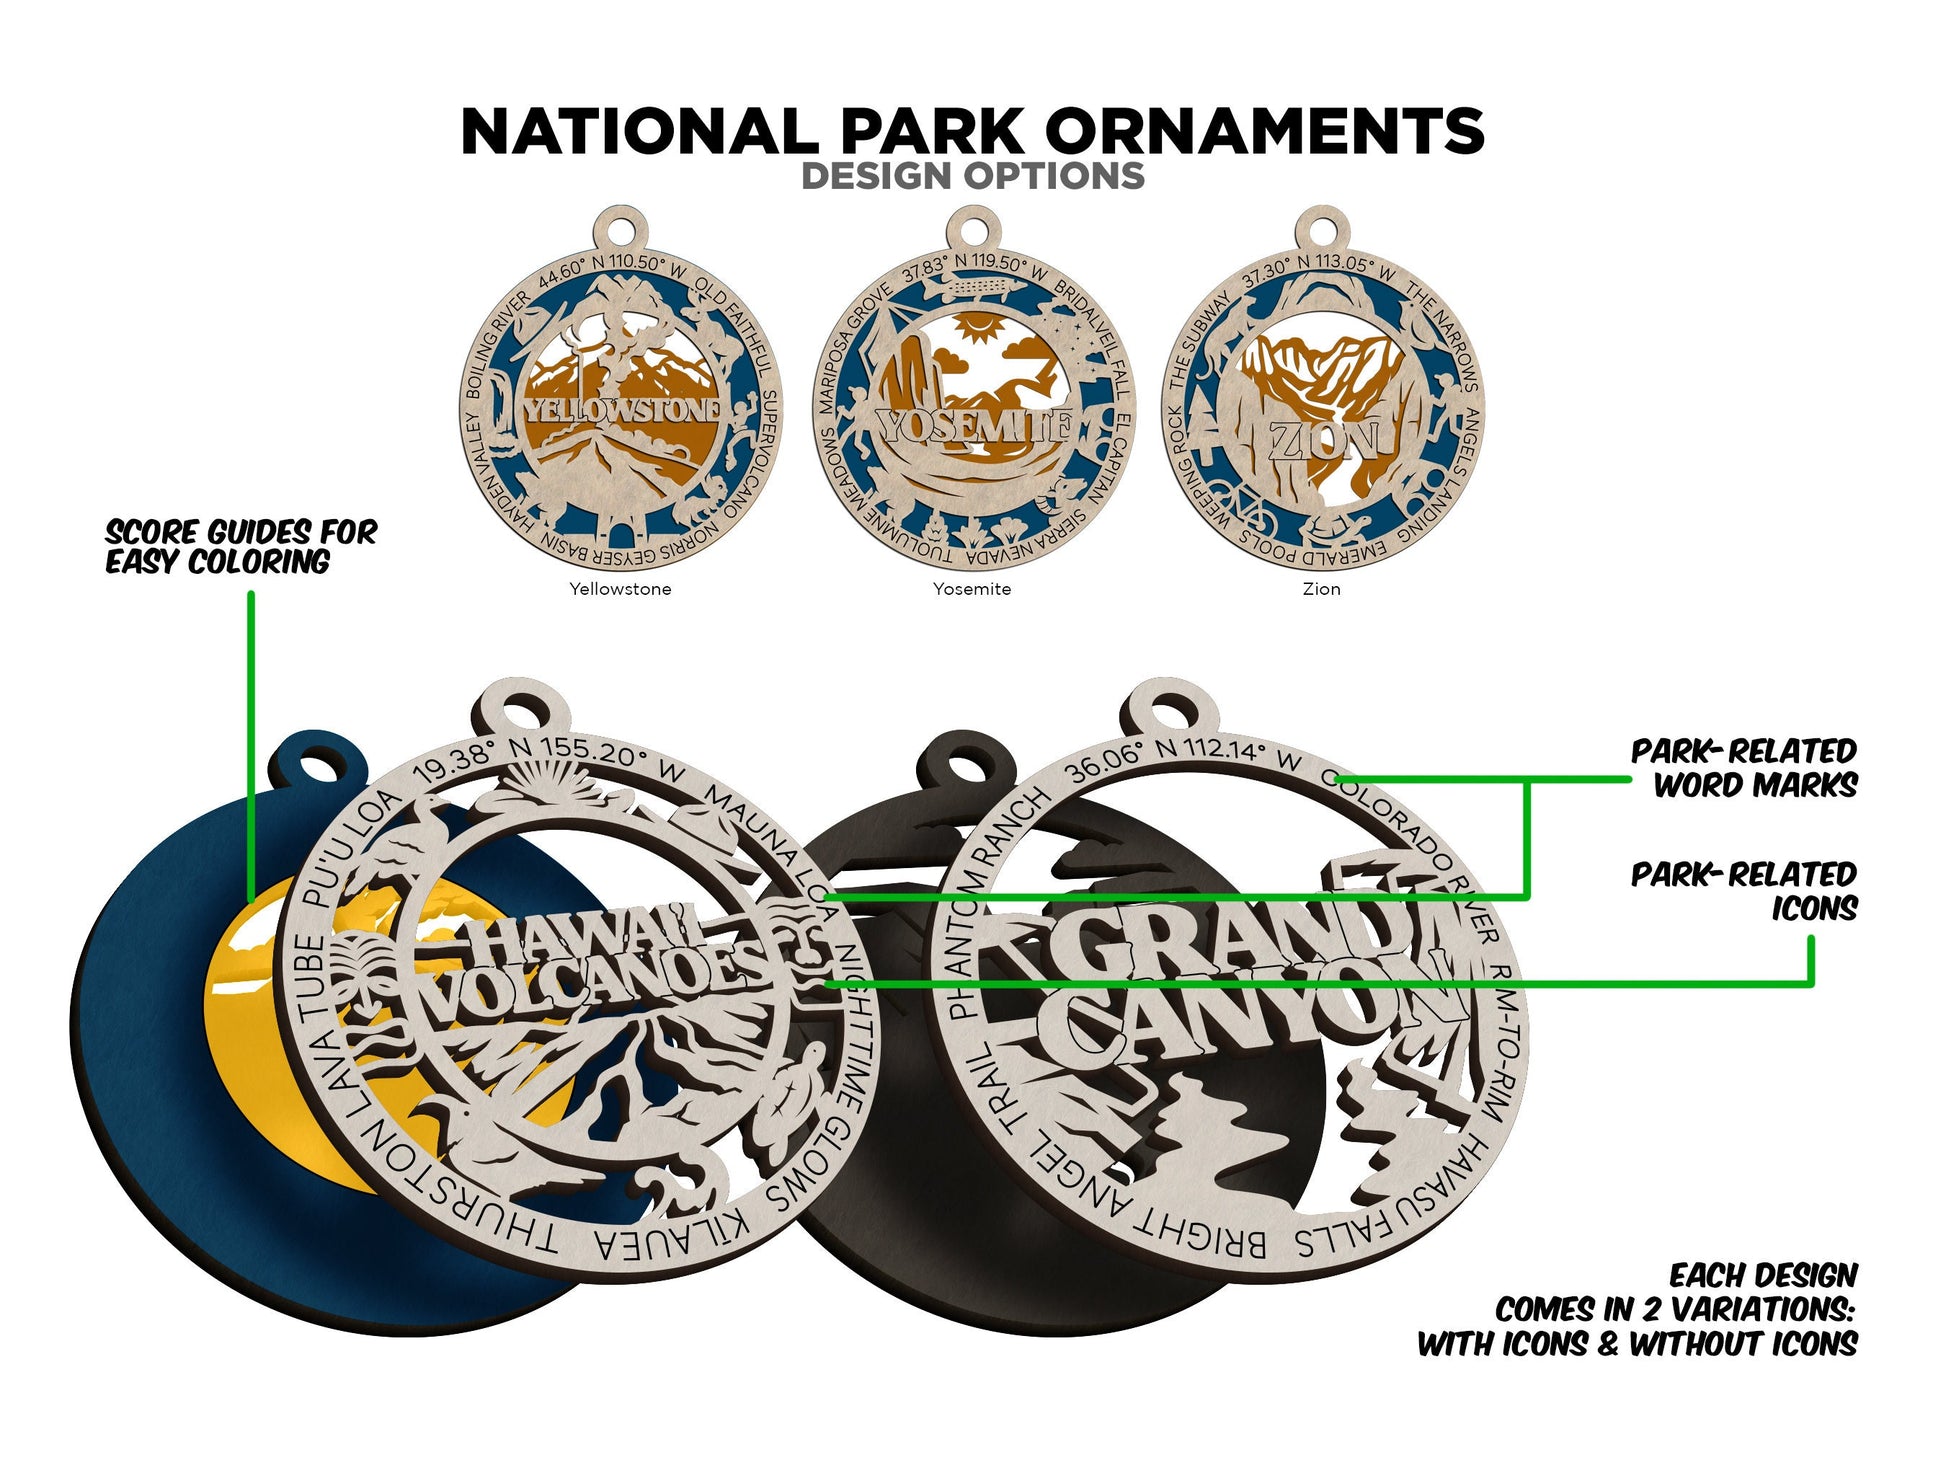 National Park Ornaments - 62 park ornaments - 2 ornament designs per Park - SVG, PDF, AI File Download - Tested On Glowforge and LightBurn